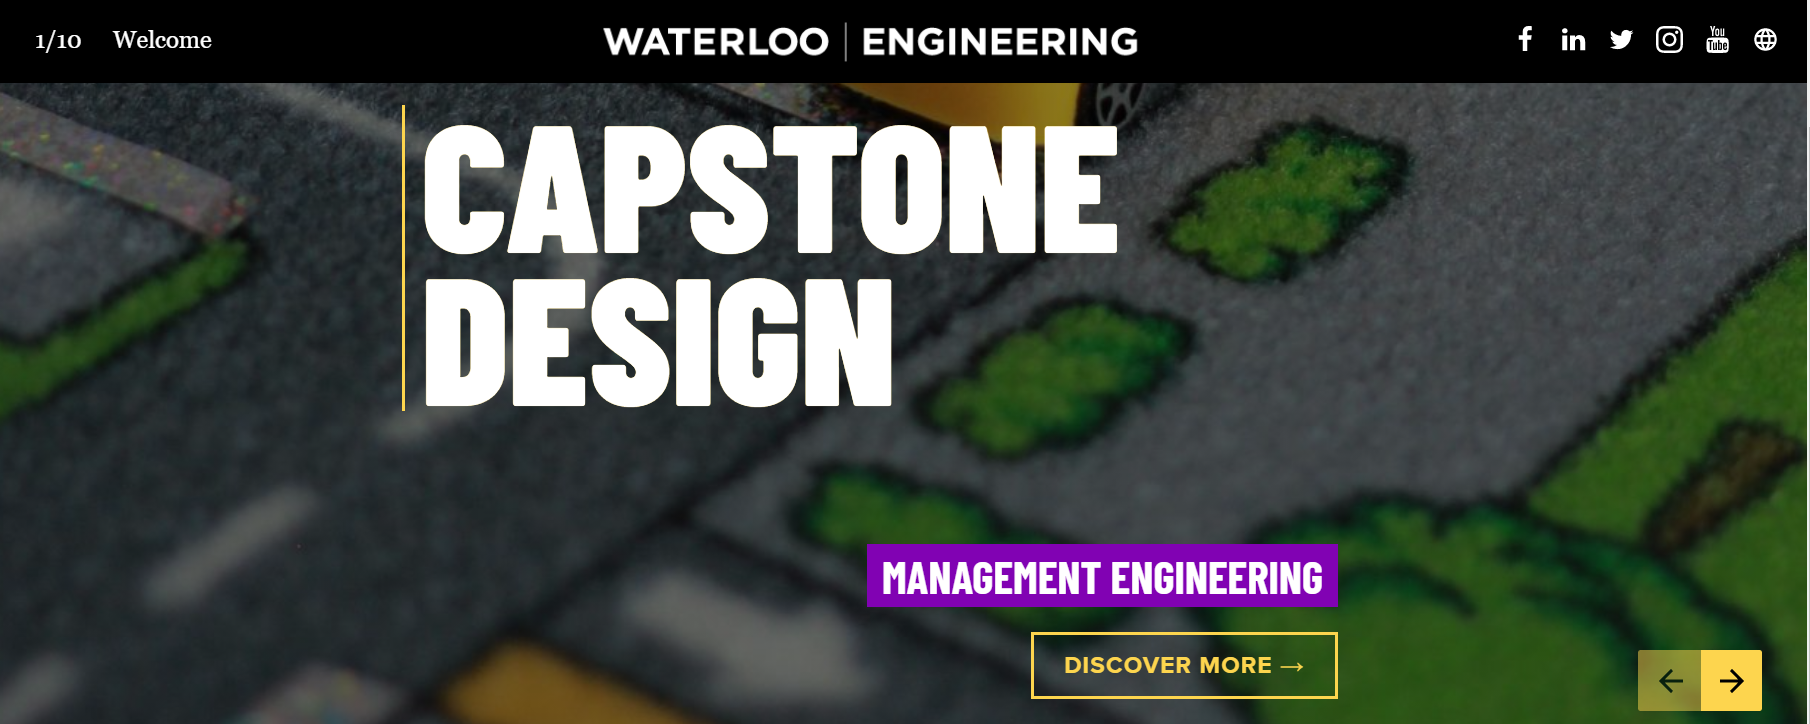 Capstone design electronic brochure 